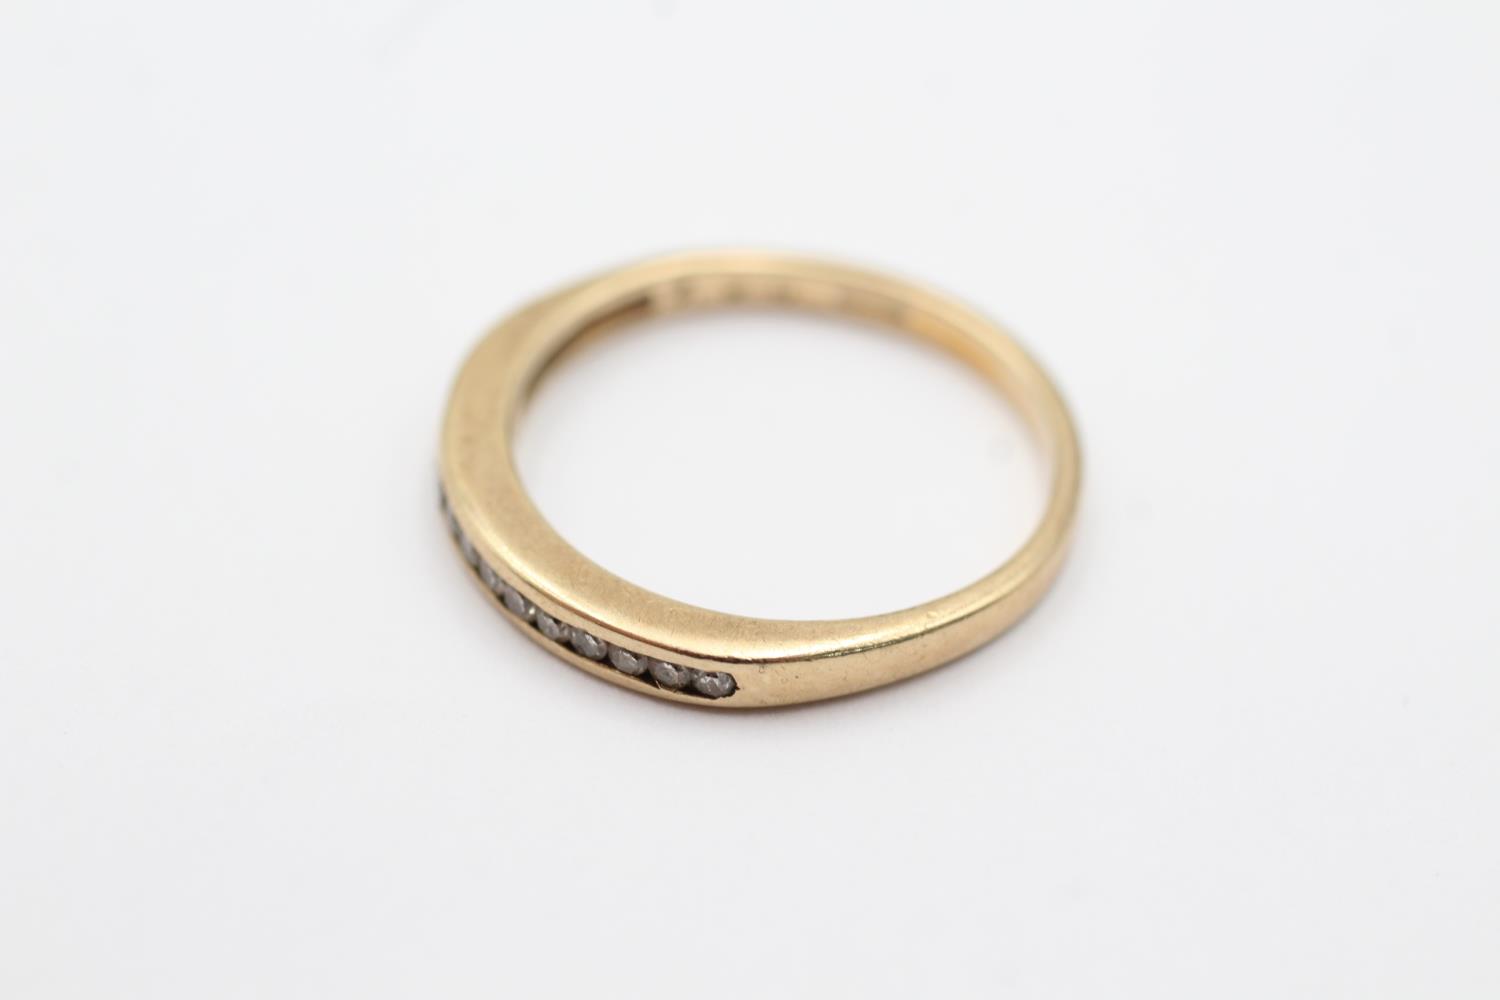 9ct gold diamond half eternity ring (1.6g) size M - Image 2 of 4